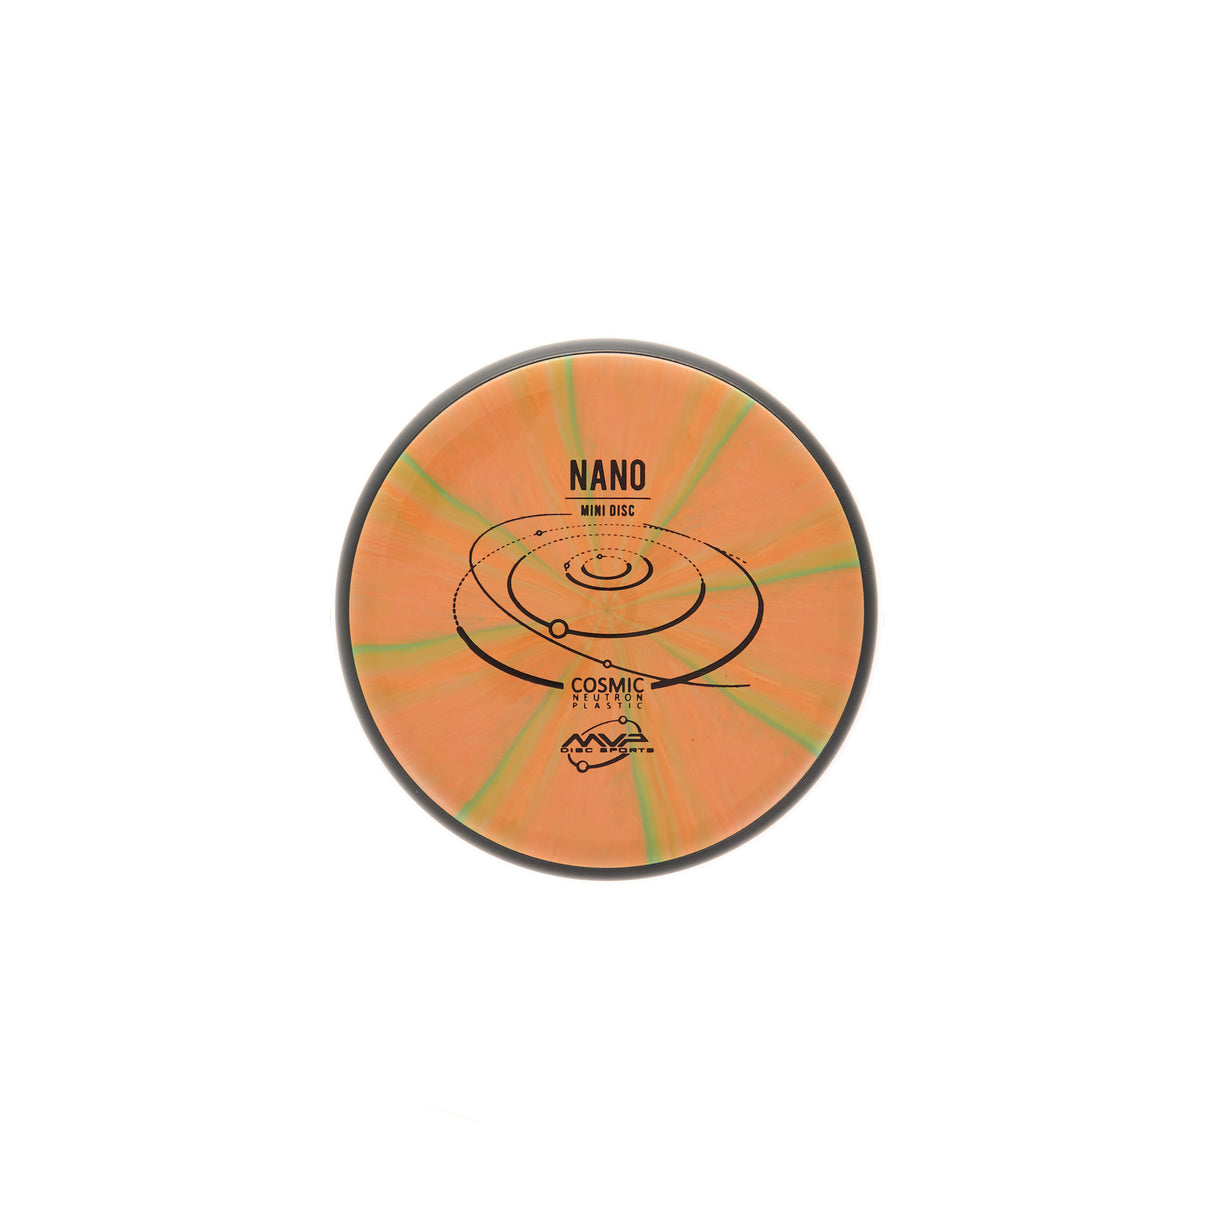 MVP Nano - Cosmic Neutron 30g | Style 0069